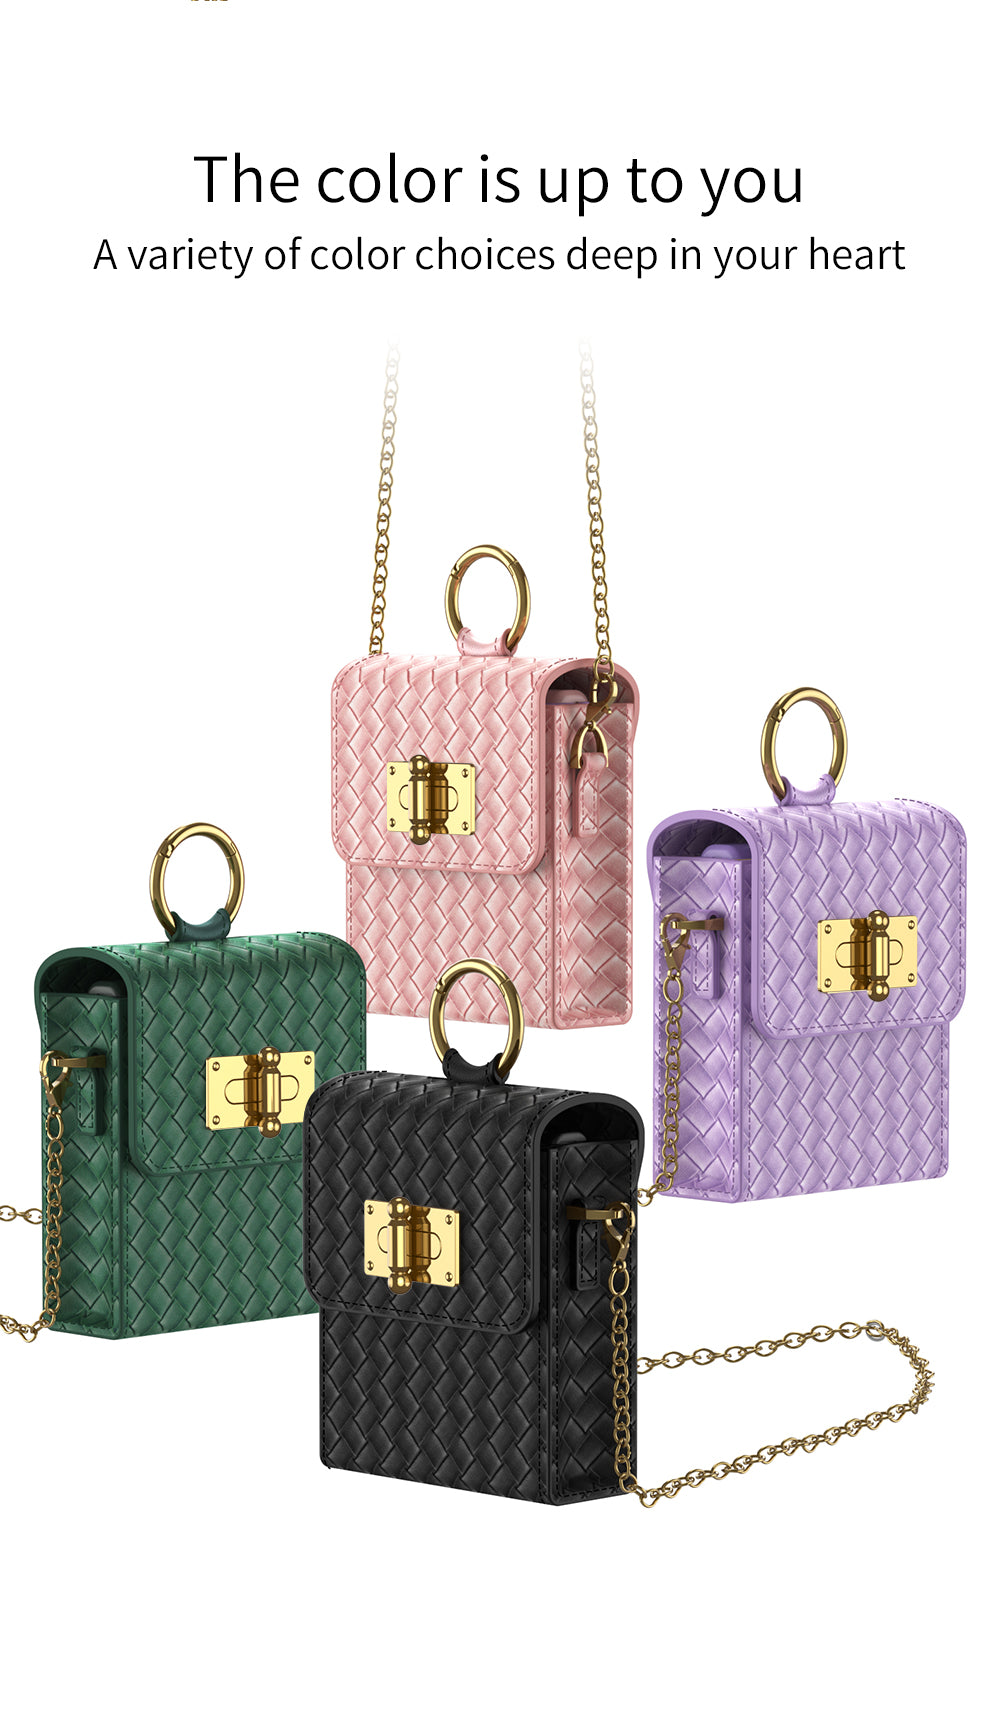 Mini women's woven small backpack phone case z flip 4 case for samsung galaxy z flip 4 cases